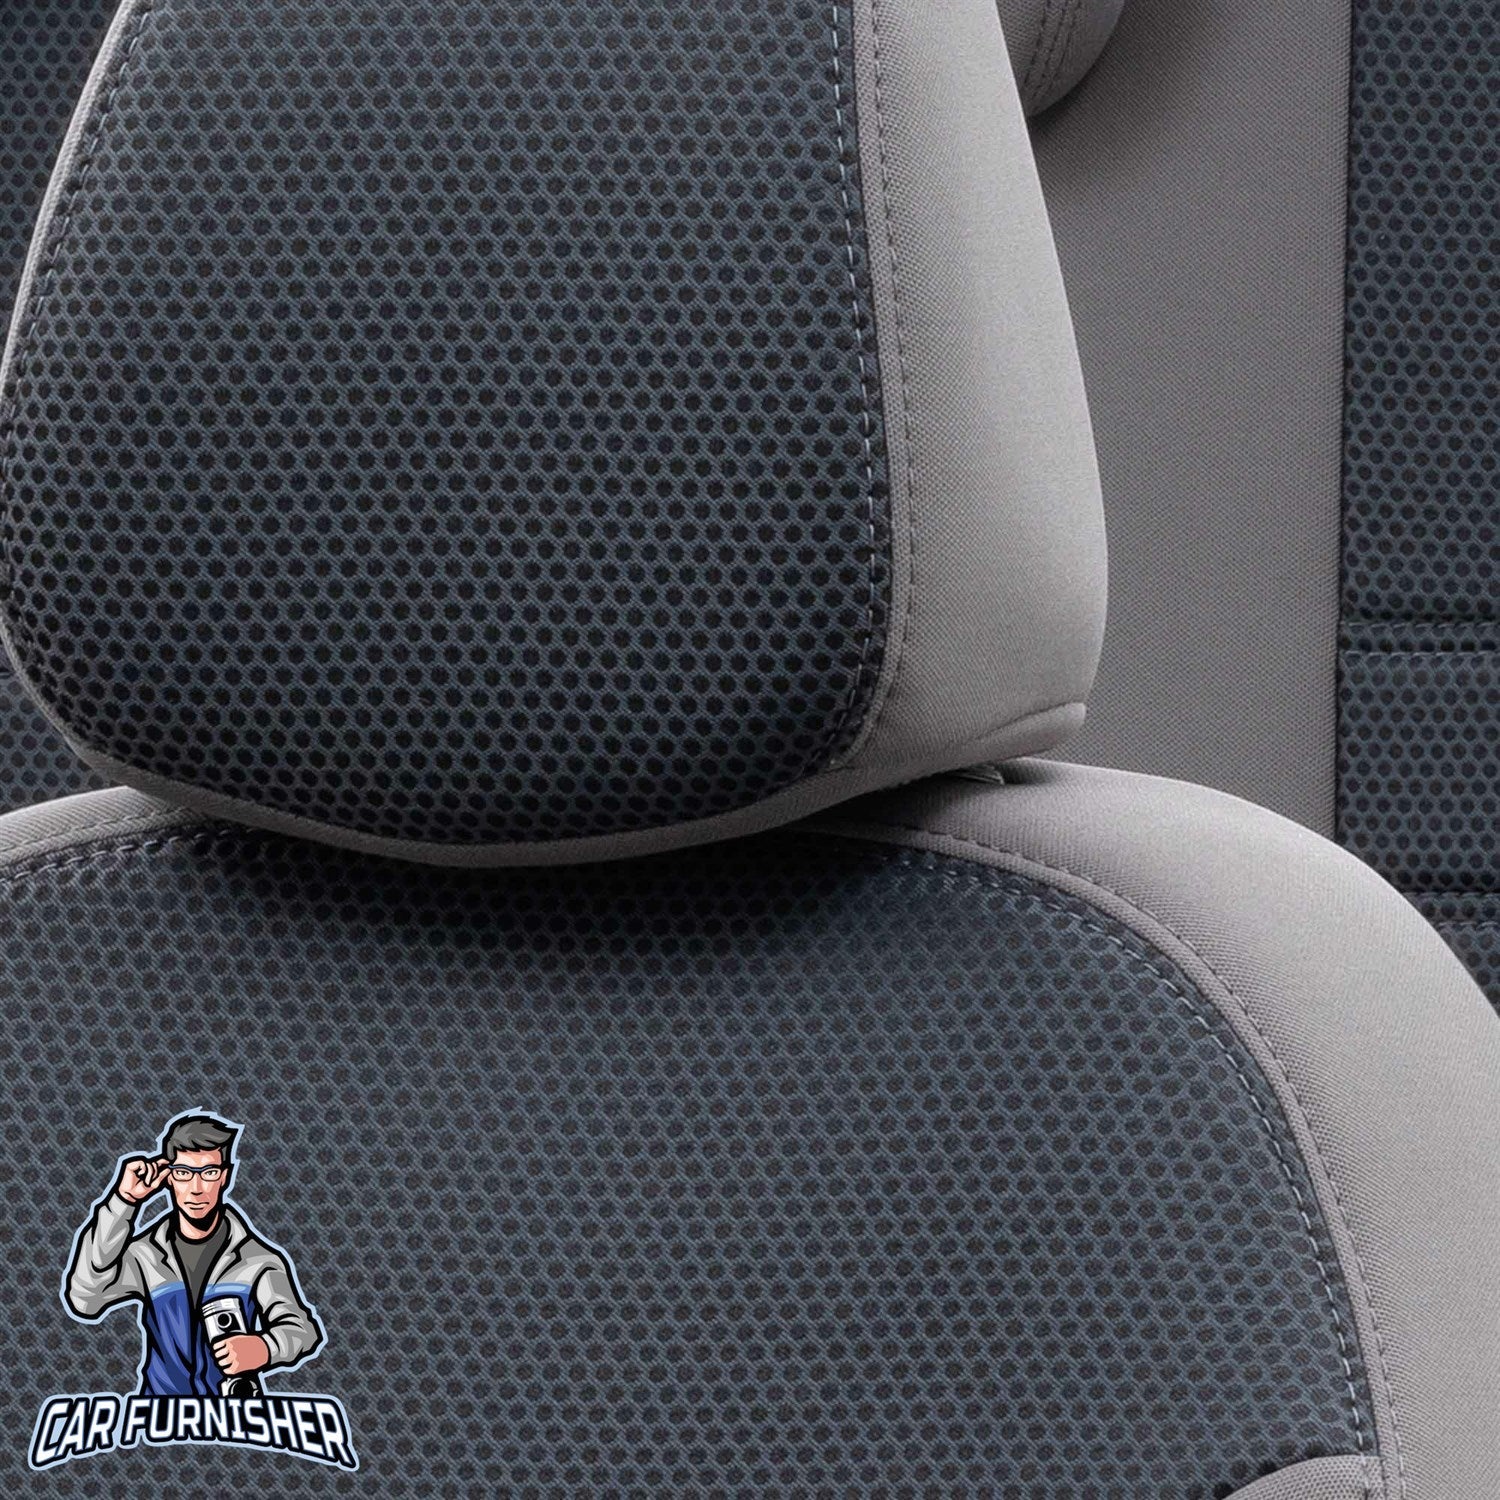 Volkswagen Bora Seat Cover Original Jacquard Design Smoked Jacquard Fabric